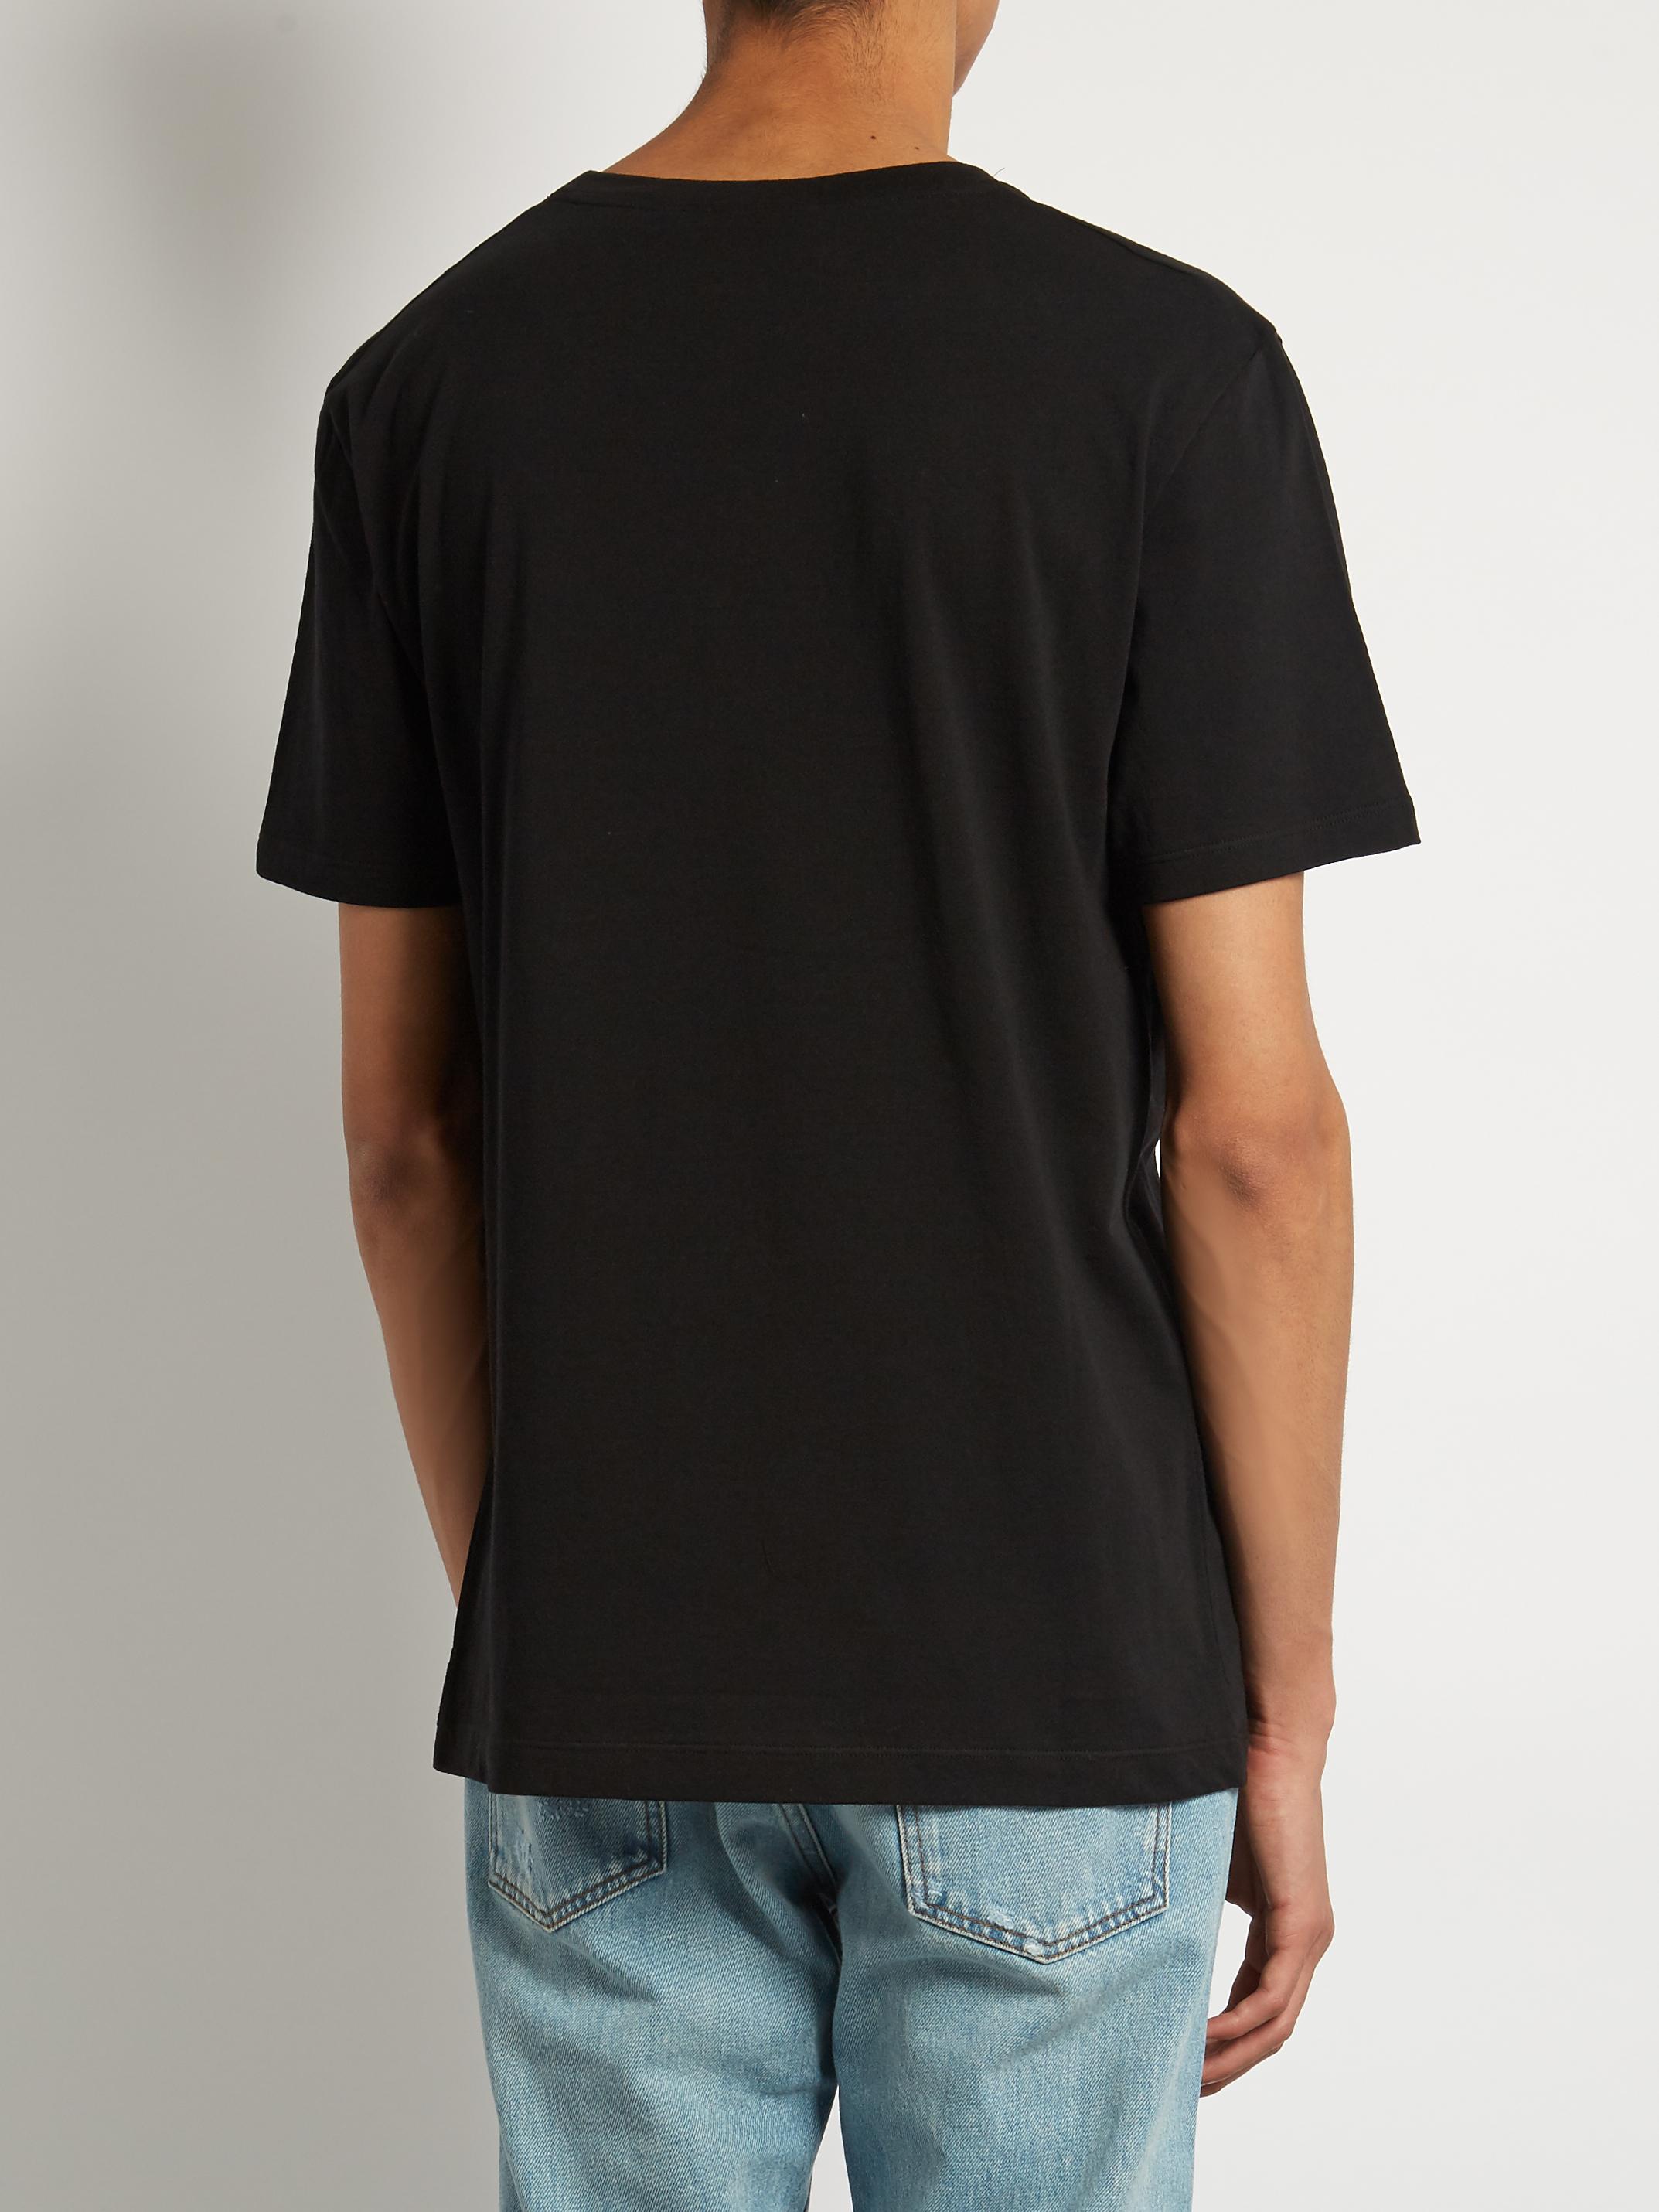 Lyst - Gucci Tiger Appliqué T-shirt in Black for Men